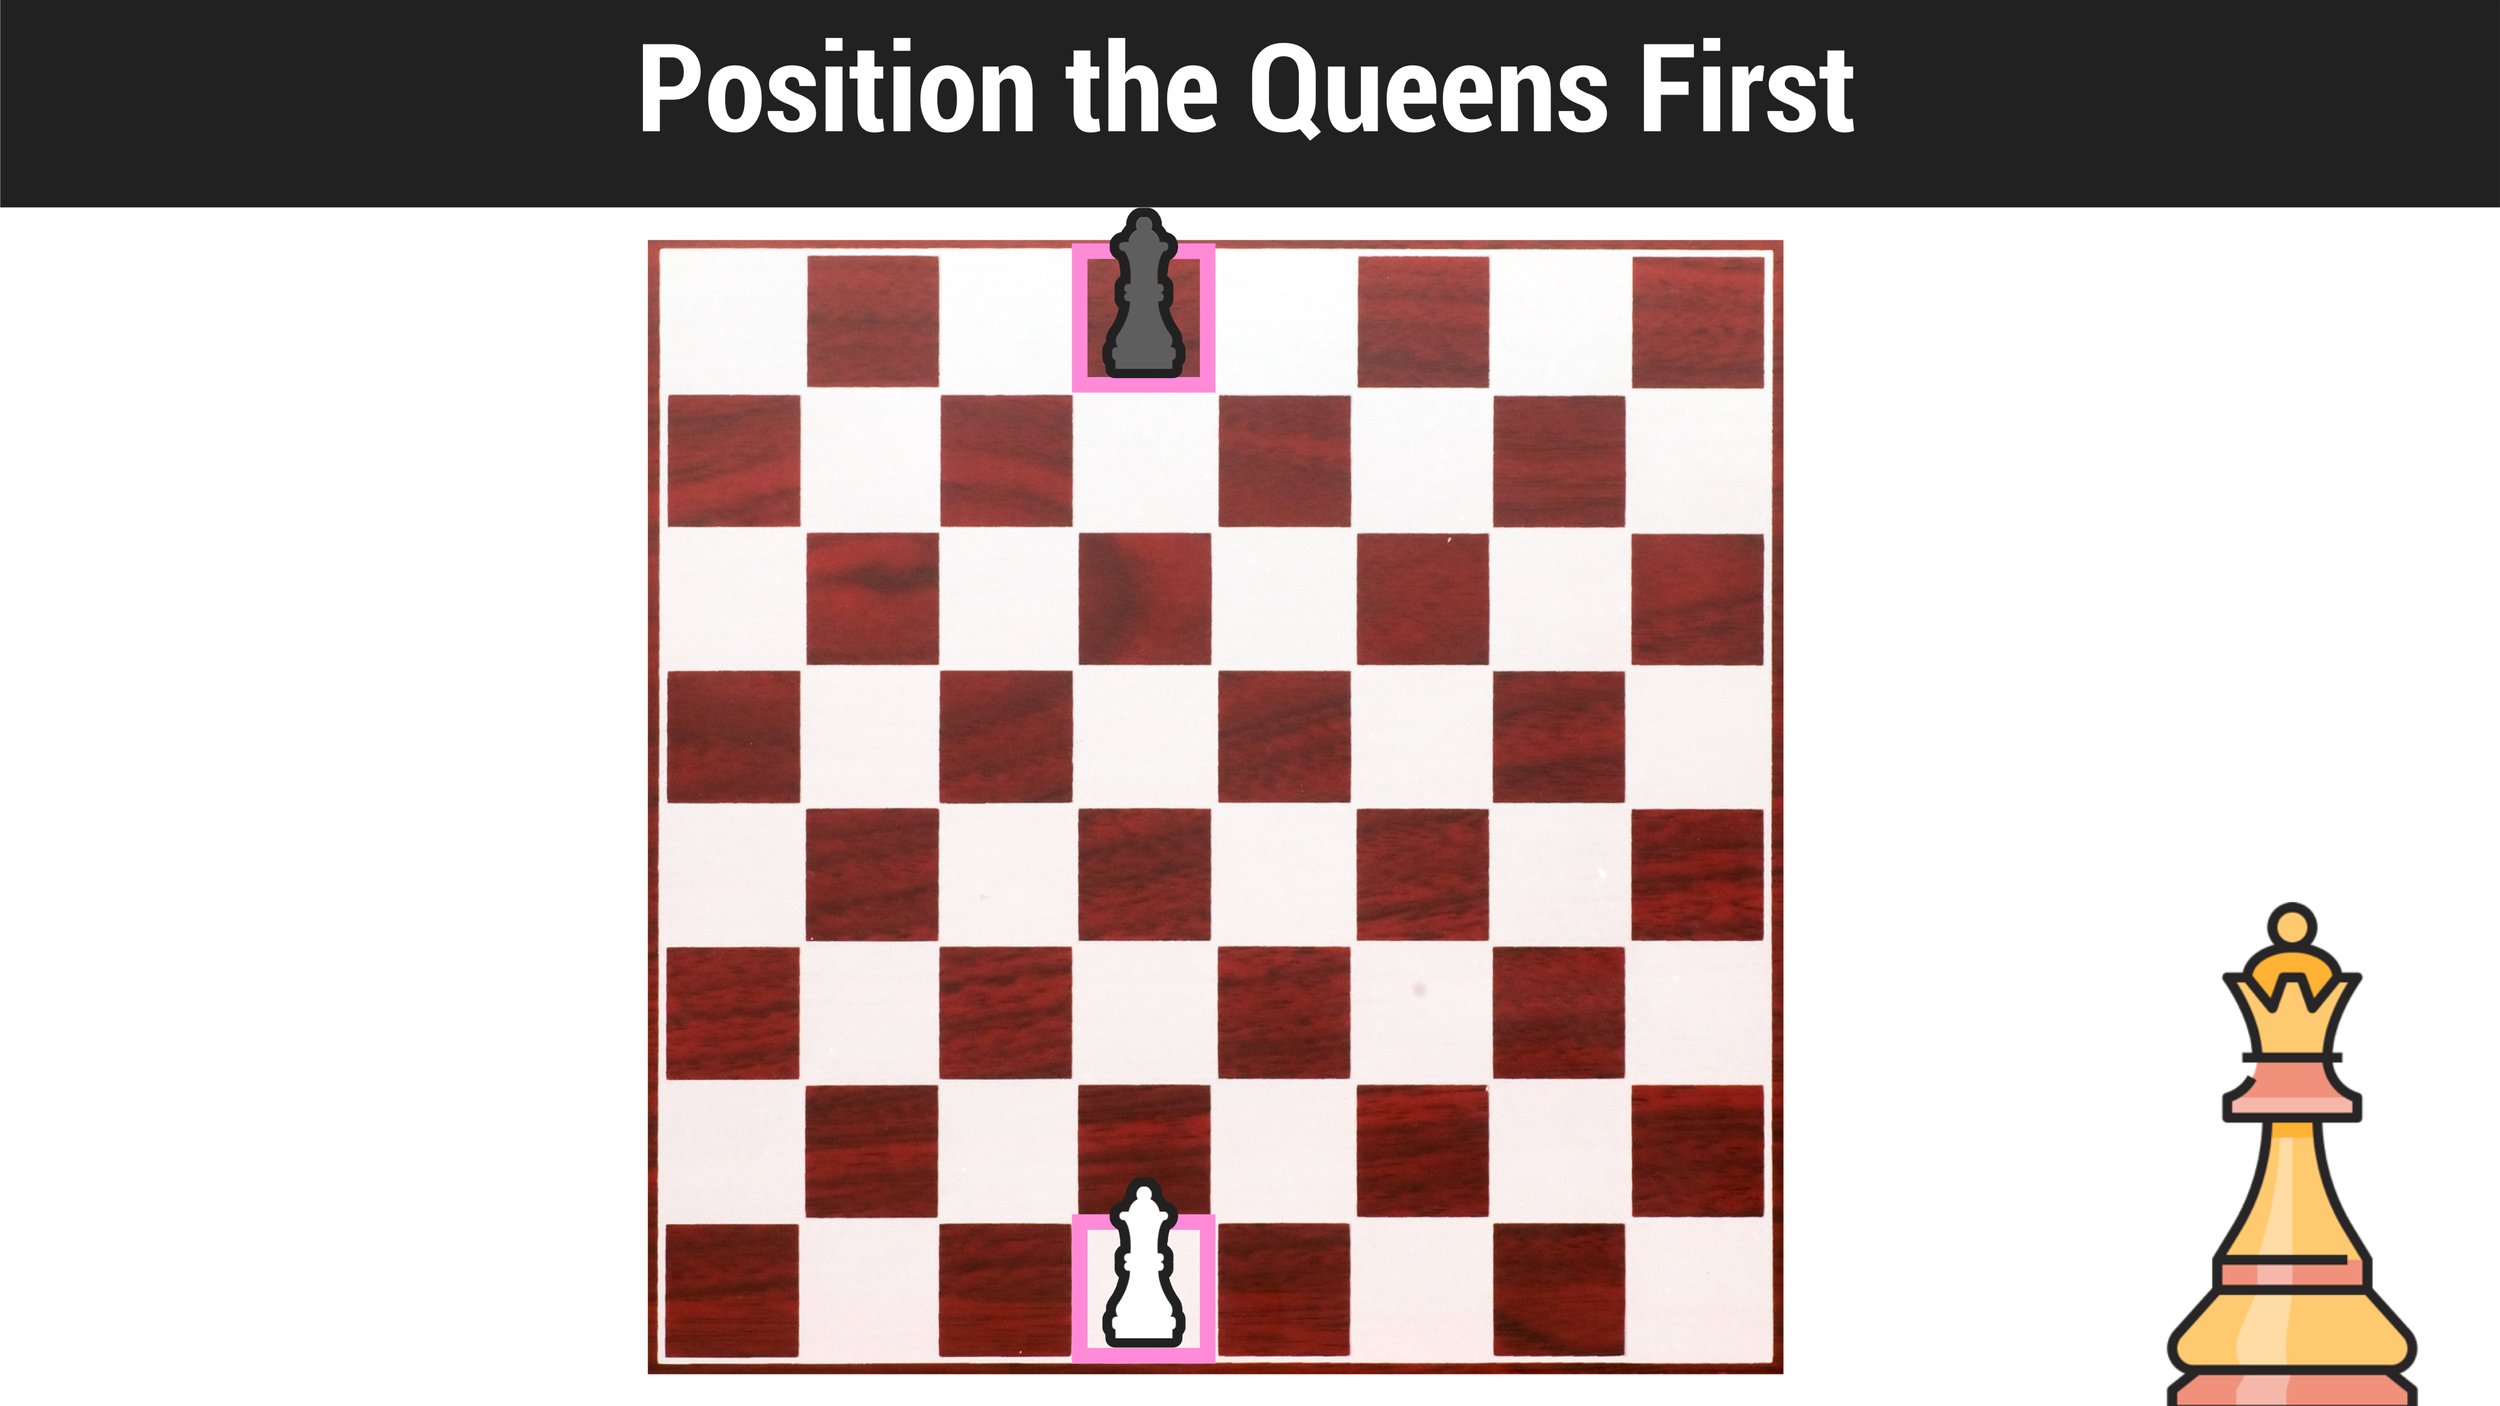 Chess Board Setup Explained! - Chessable Blog